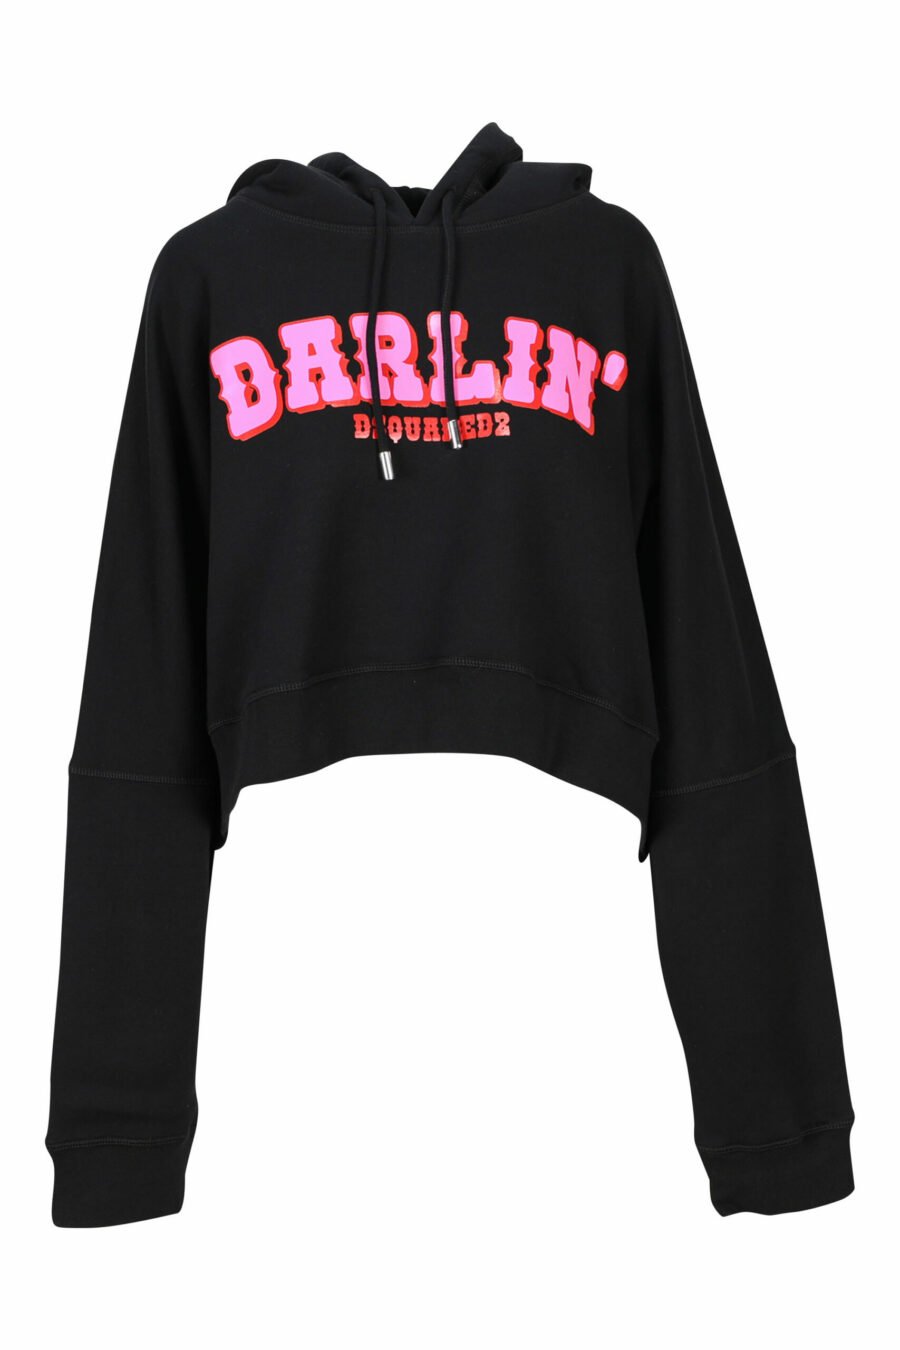 Black hooded sweatshirt with fuchsia maxillogo "darlin'" - 8054148144166 scaled